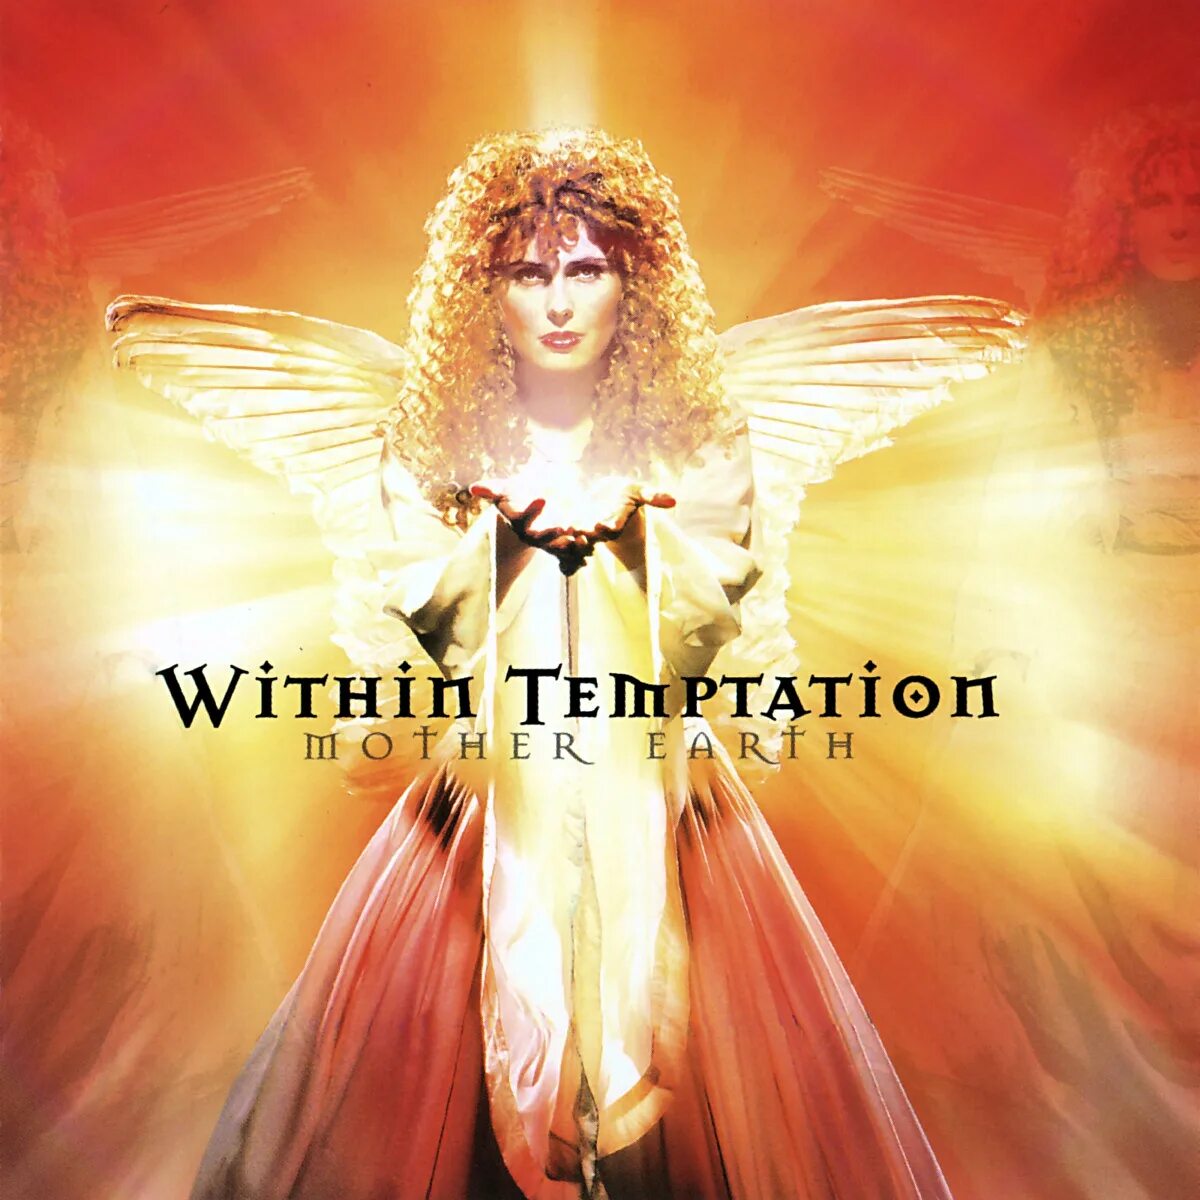 Within temptation альбомы. Within Temptation mother Earth 2000. Within Temptation 2000. Within Temptation обложки. Within Temptation обложки альбомов.